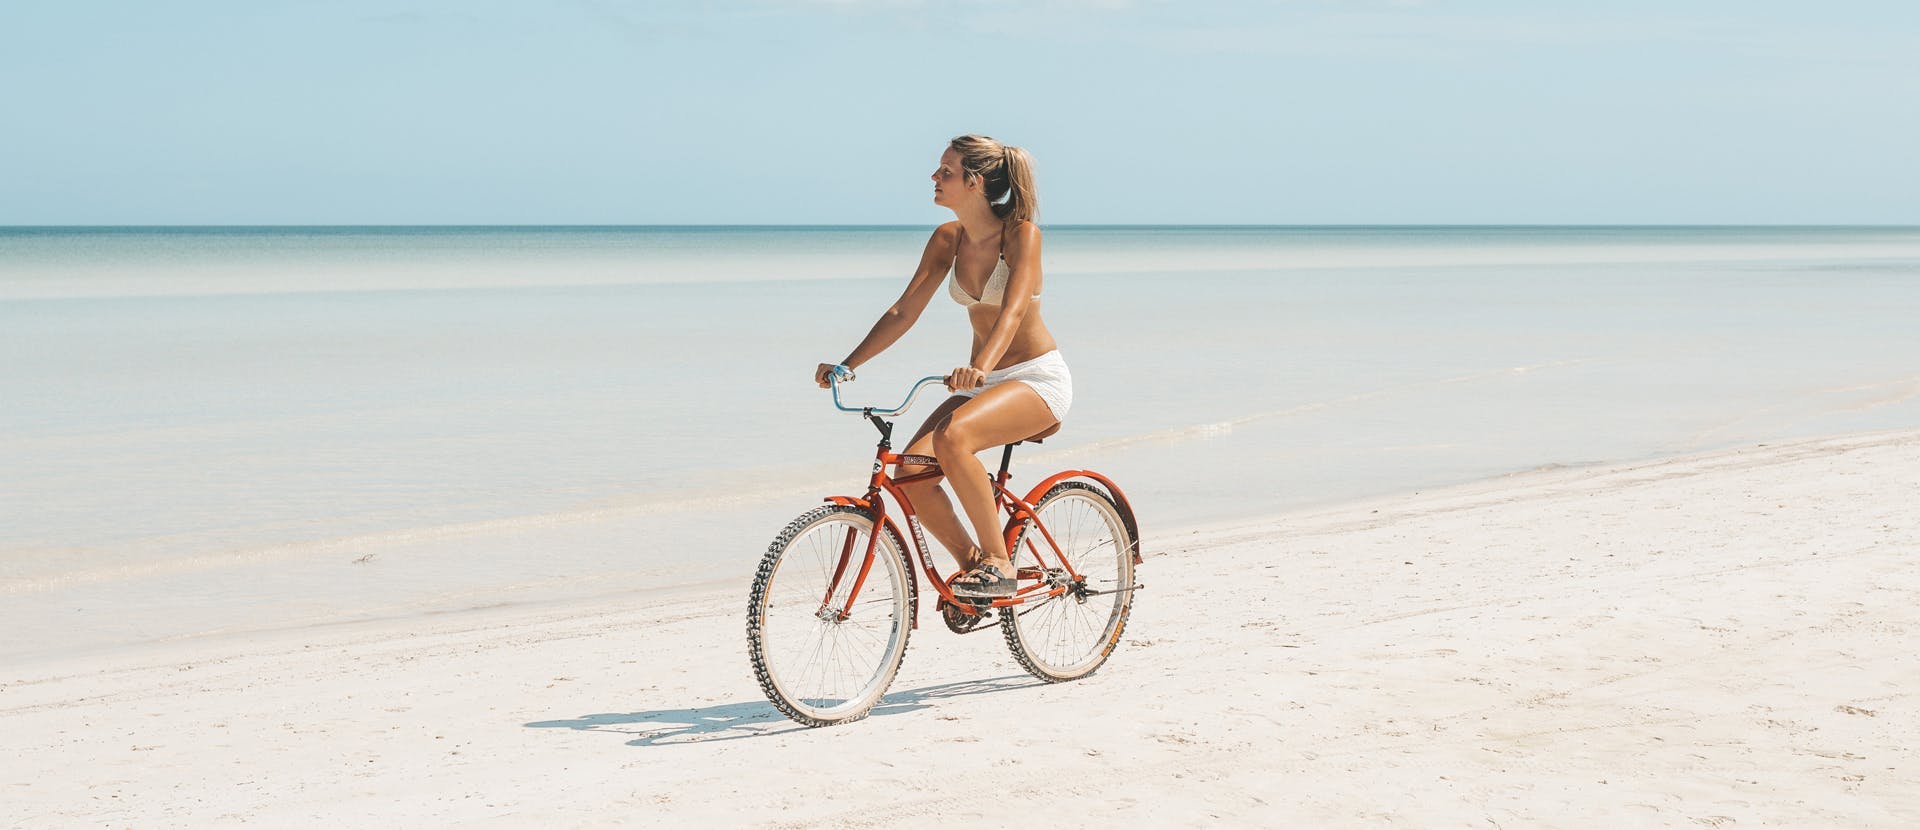 bicycle vehicle person wheel outdoors sea nature shoreline beach coast